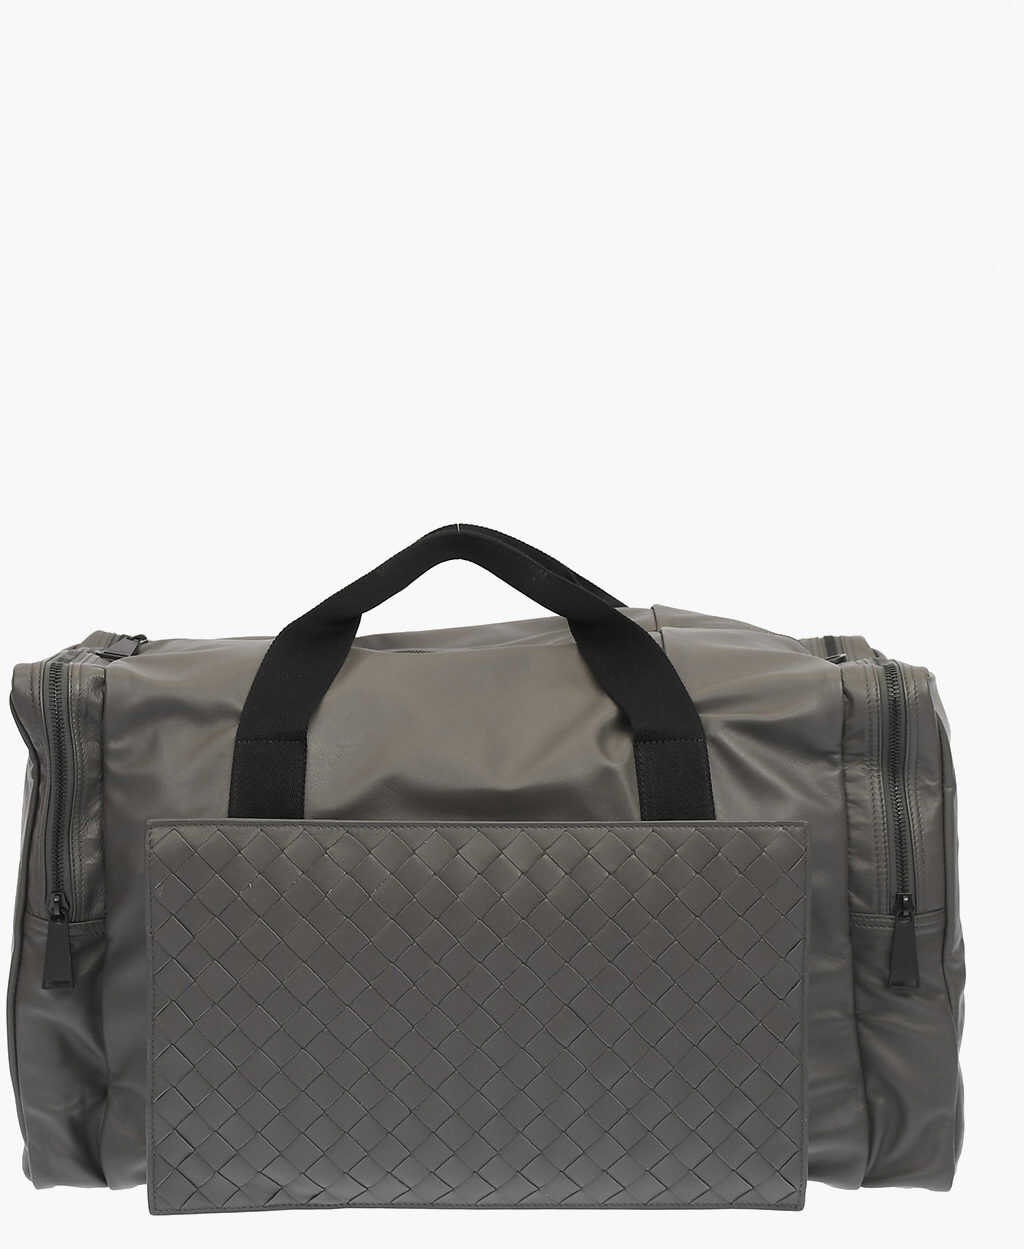 Bottega Veneta Soft Leather Ultralight Travel Bag Gray b-mall.ro